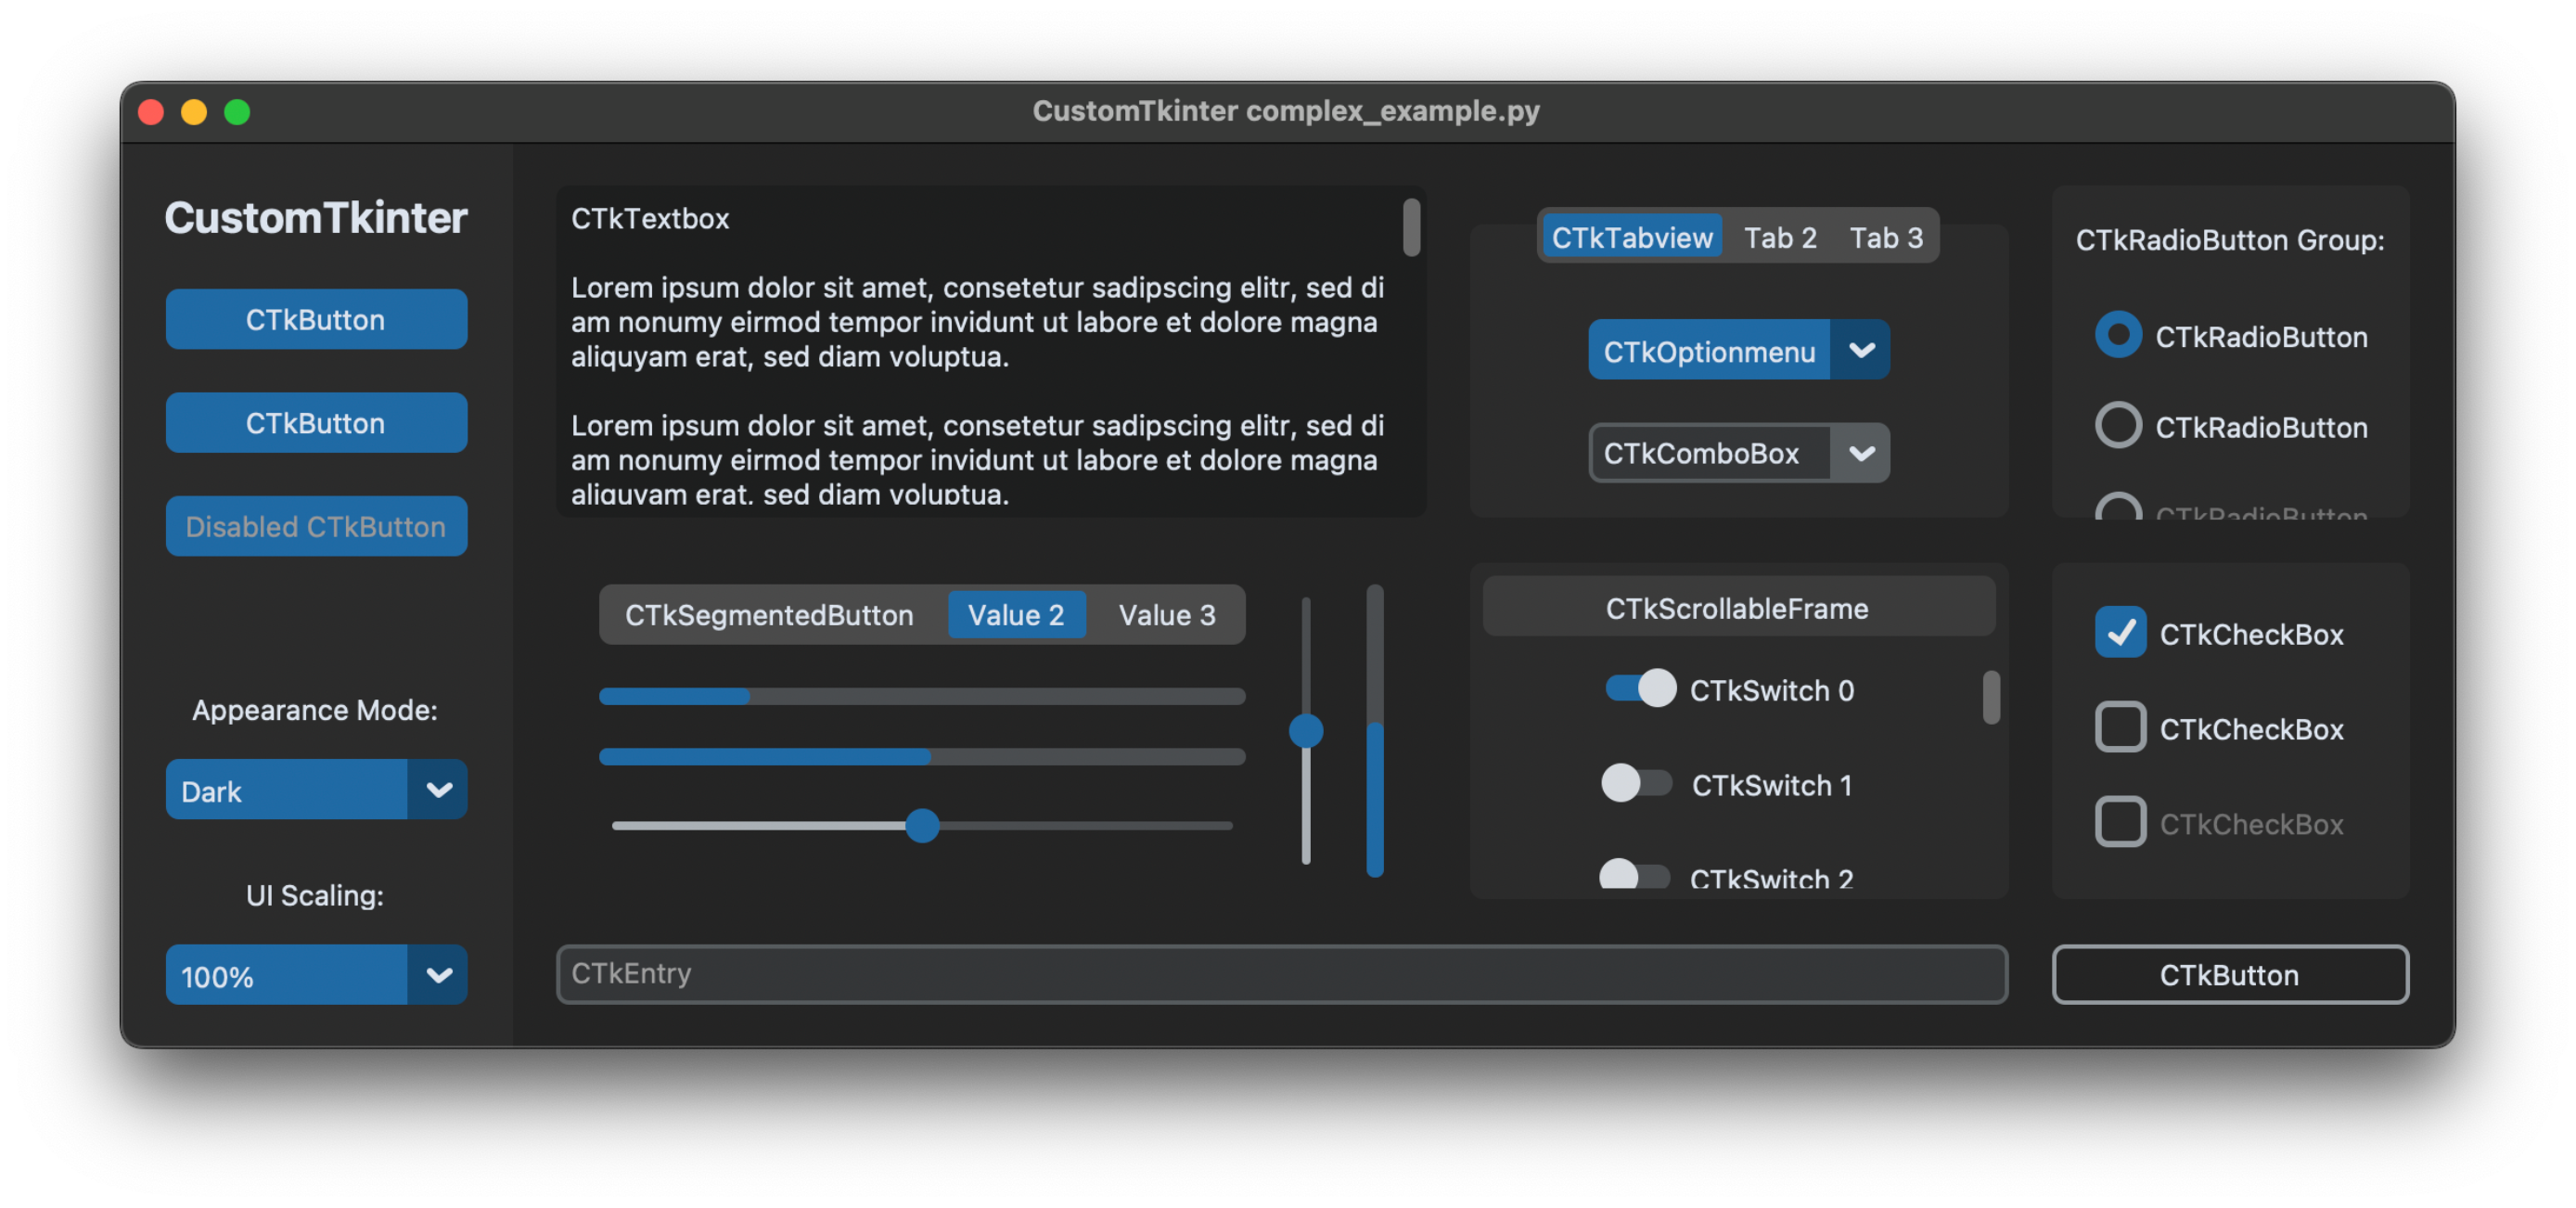 CustomTkinter complex UI example on macOS dark mode